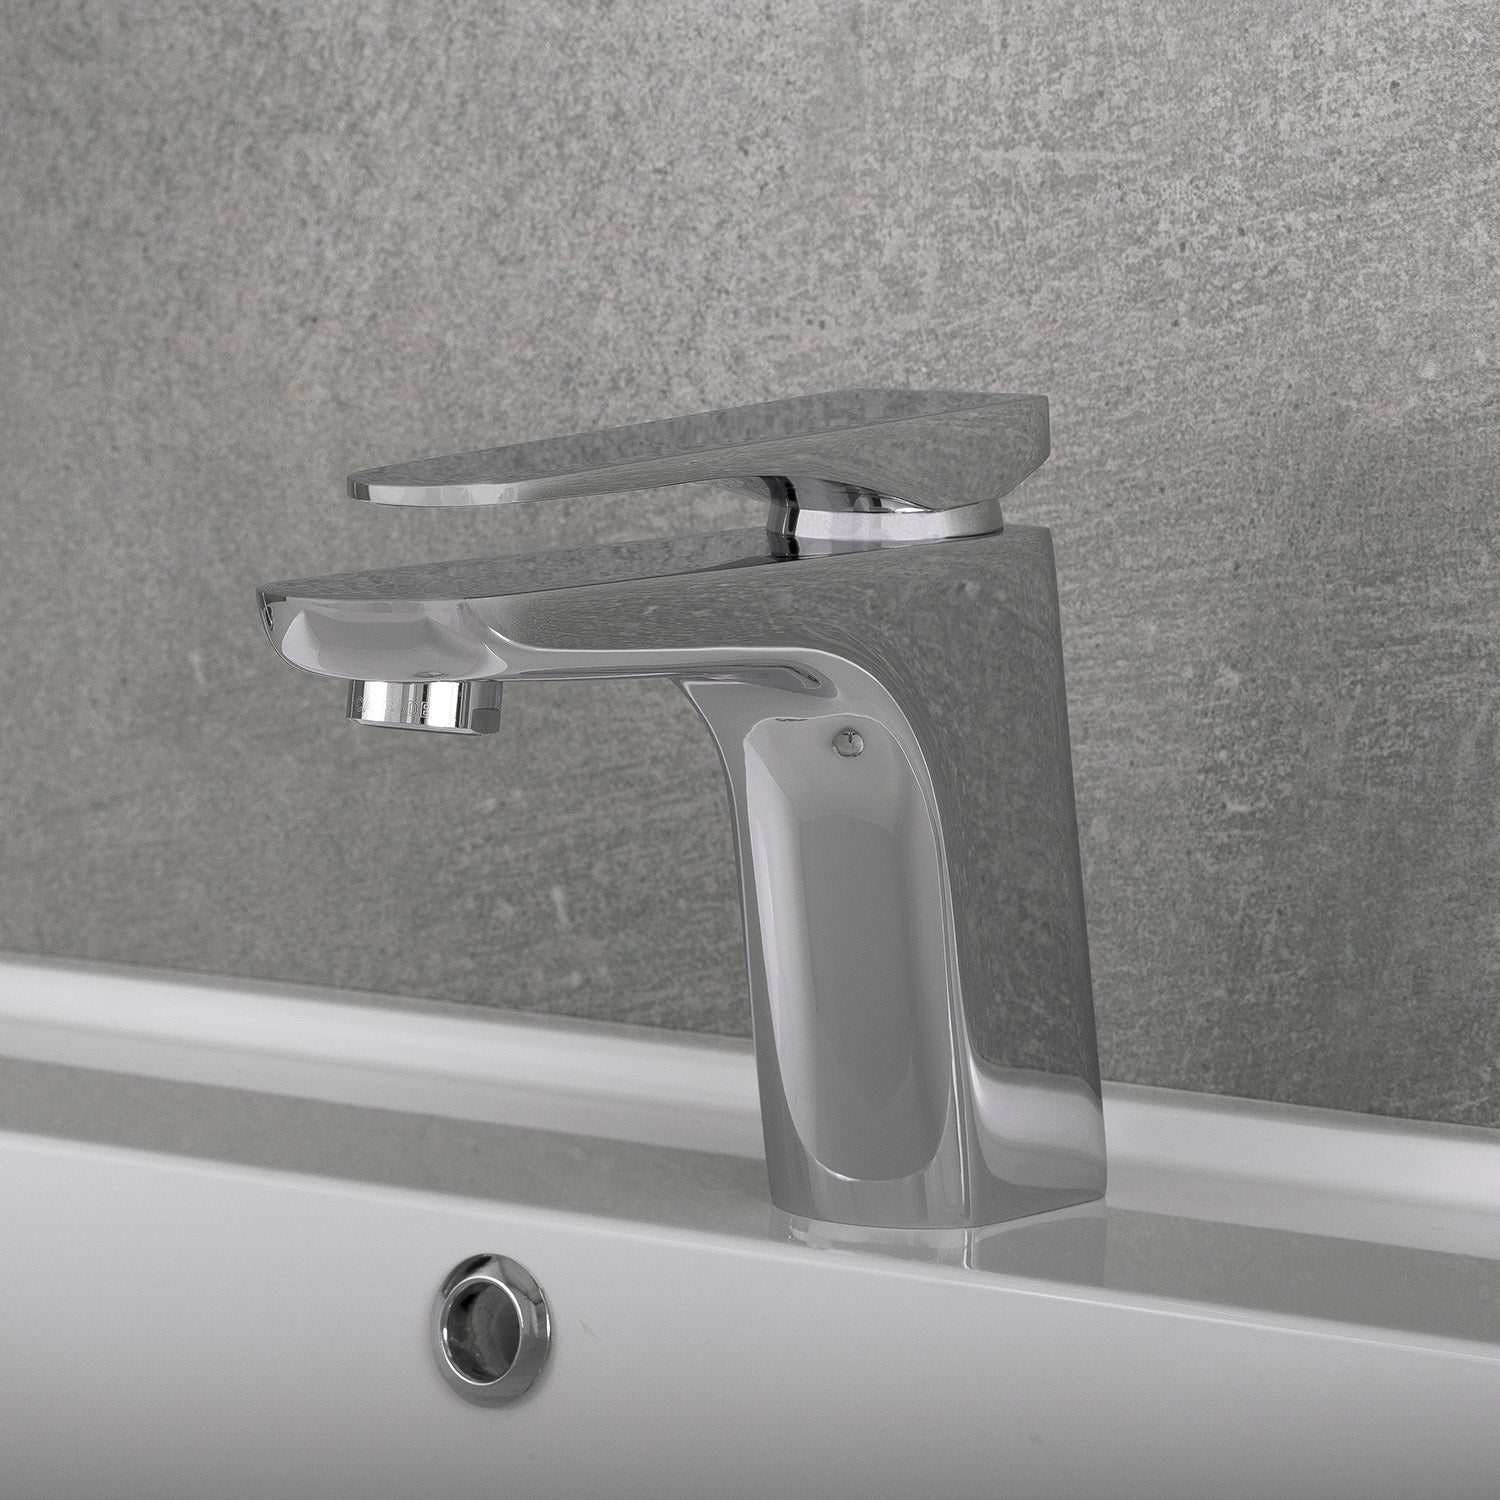 DAX Single Handle Bathroom Faucet, Brass Body, Chrome Finish, 6-7/8 x 5-5/16 Inches (DAX-805A-CR)